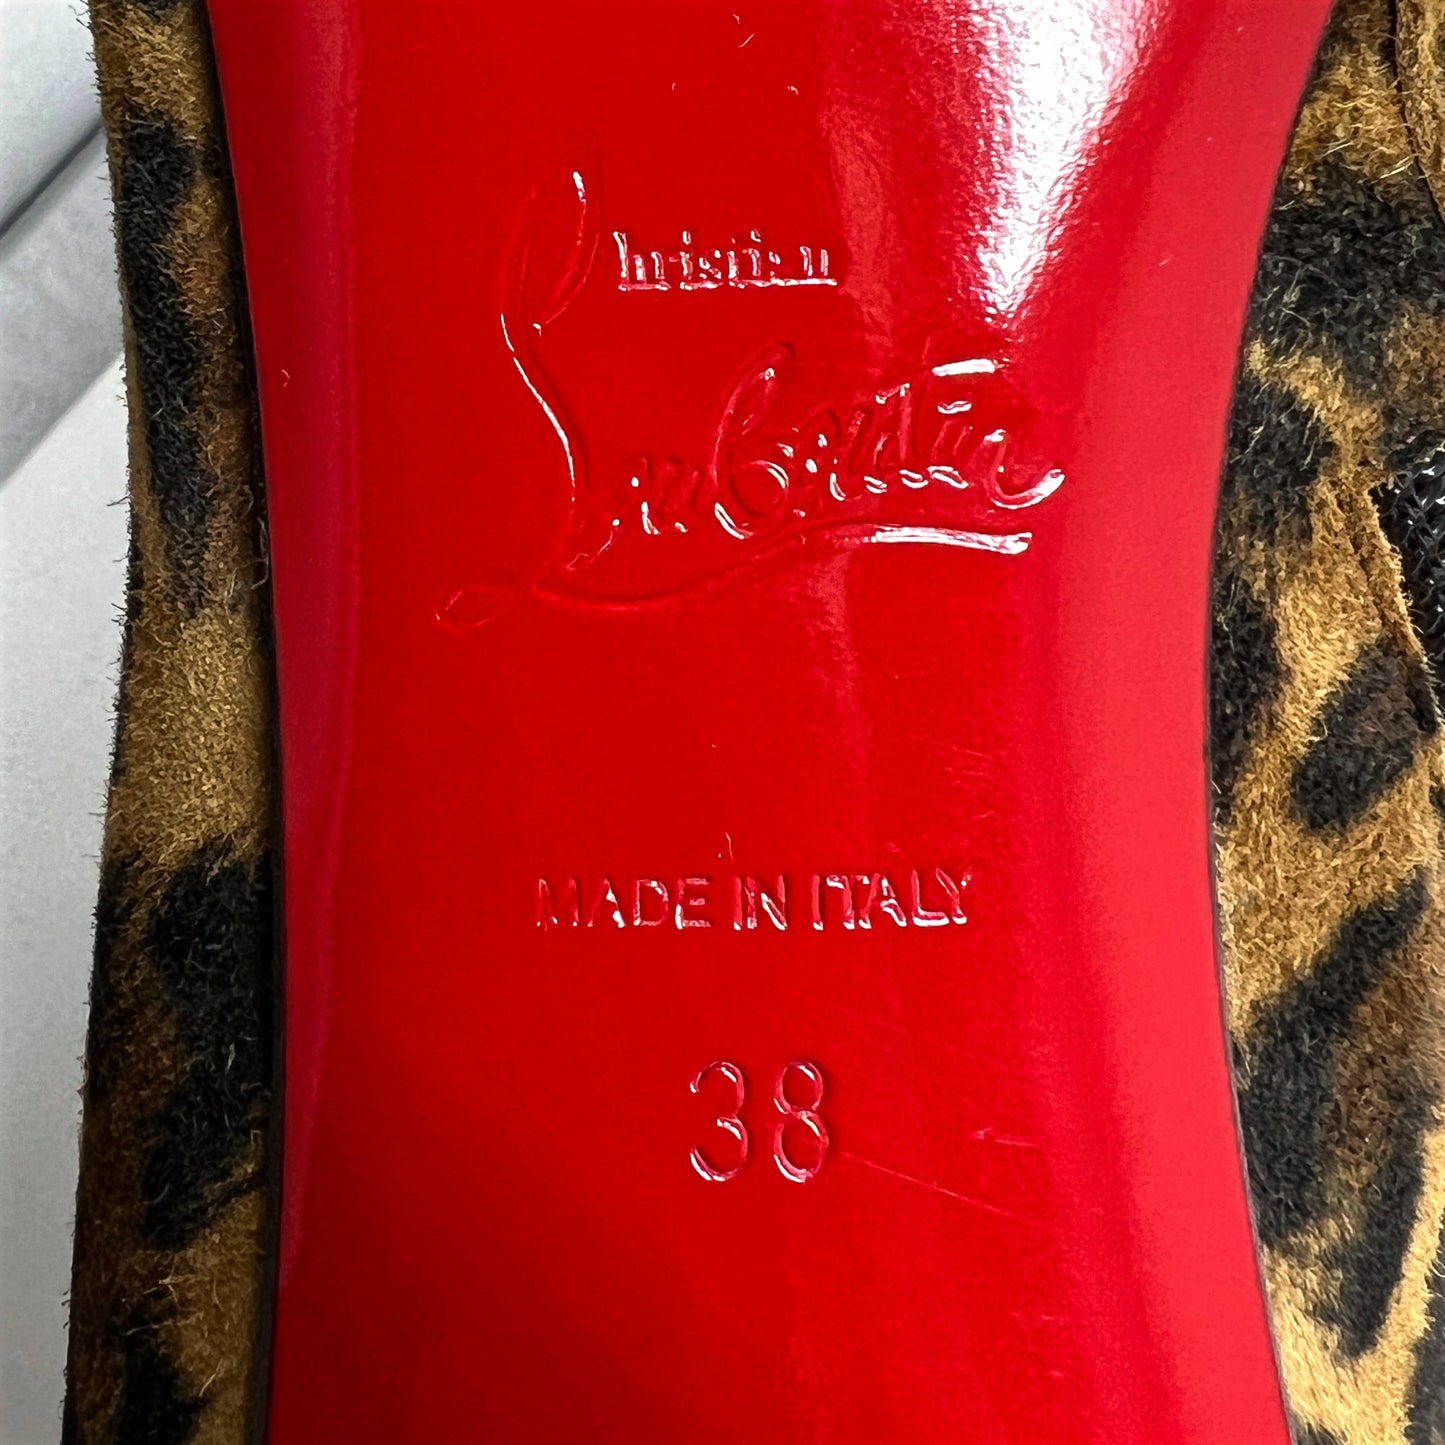 Christian Louboutin Eloise 85 Suede Leopard Animal Print Ankle Boot Heels Size Eu 38